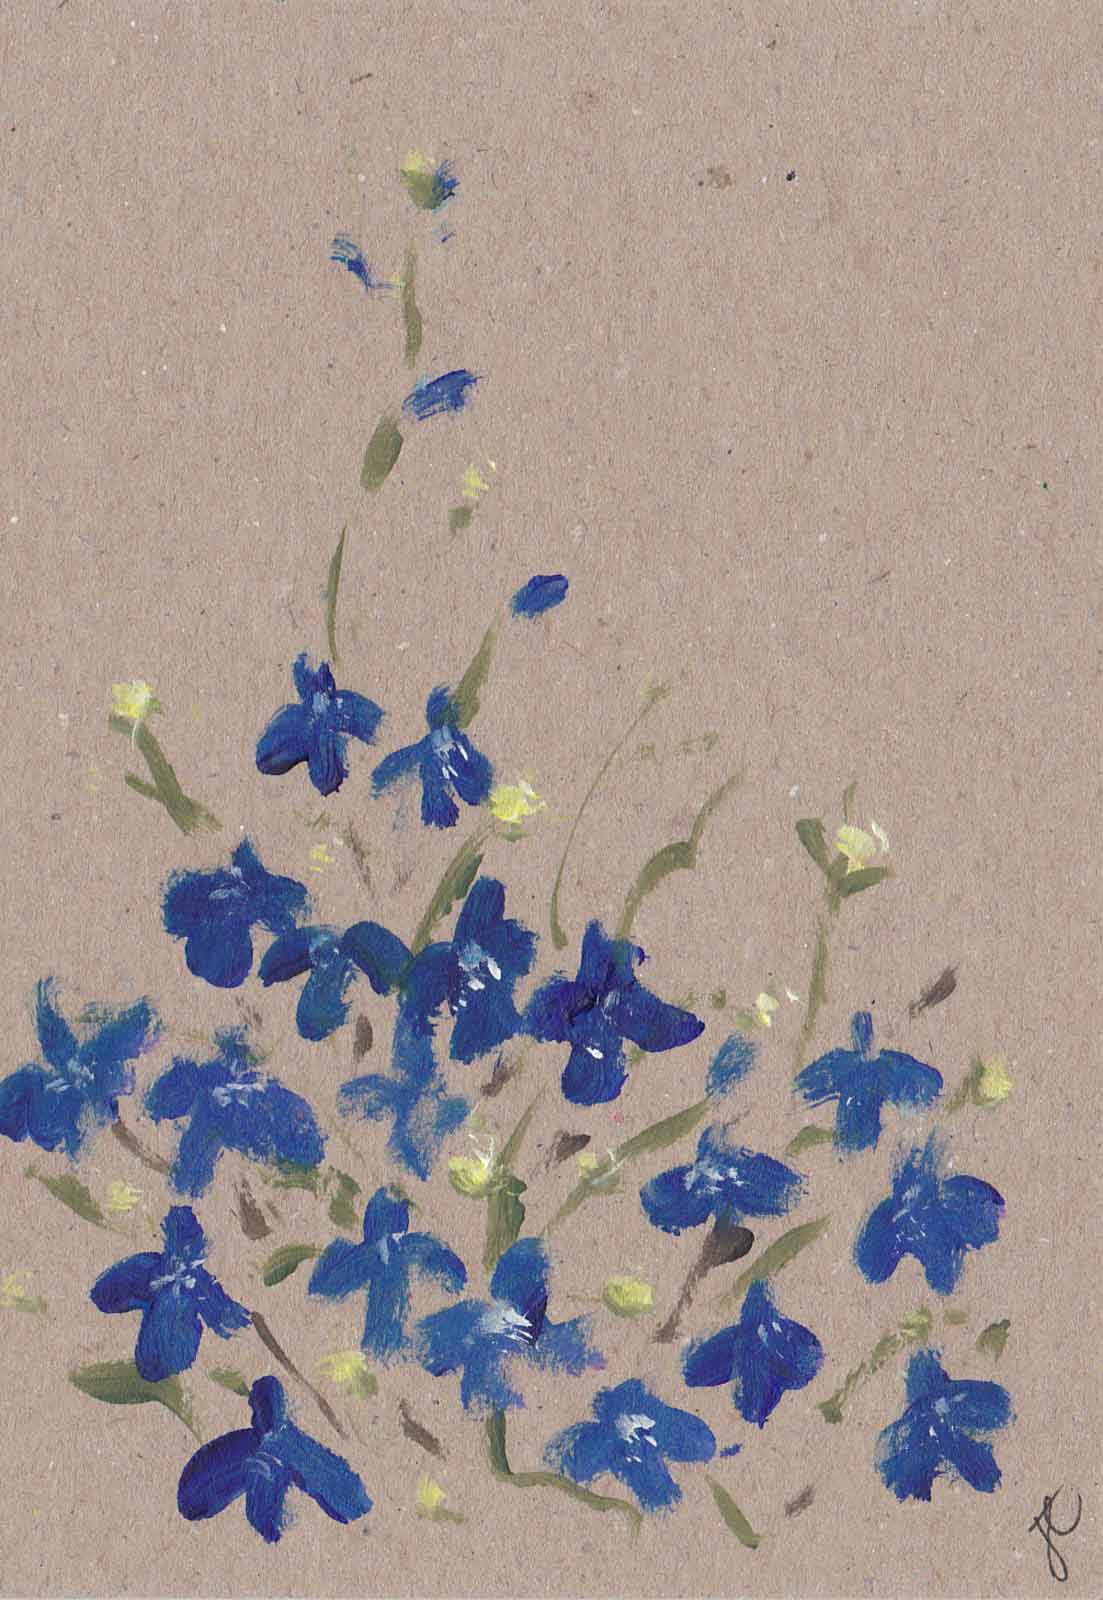 Hnad painted card with blue lobelia flowers